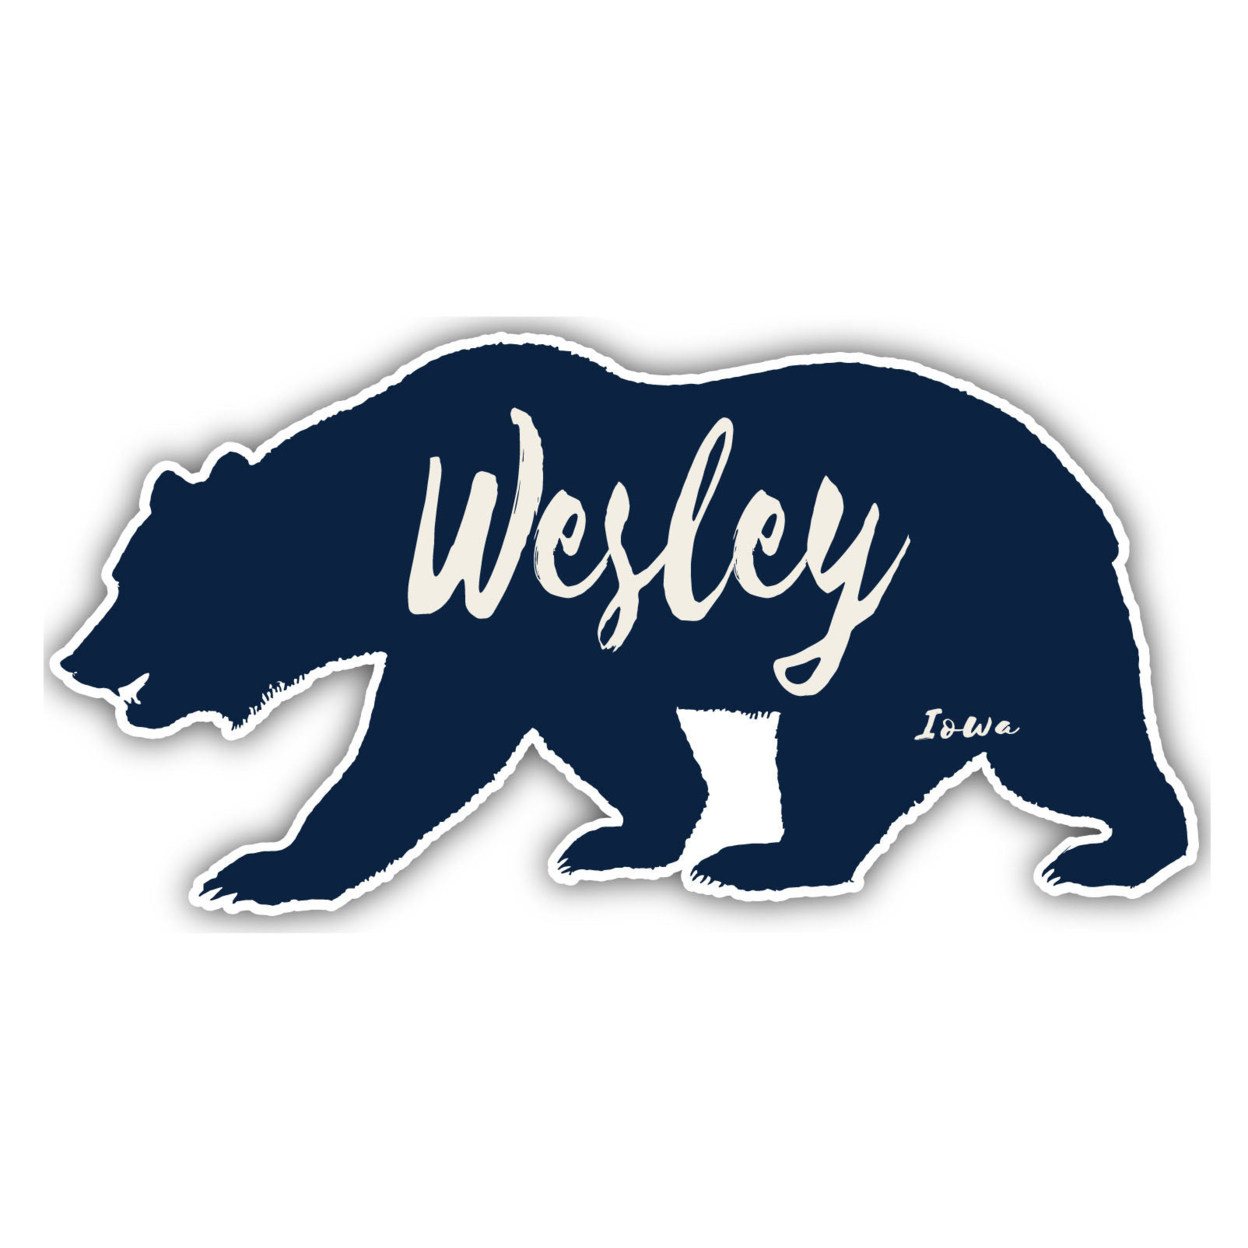 Wesley Iowa Souvenir Decorative Stickers (Choose Theme And Size) - Single Unit, 2-Inch, Bear